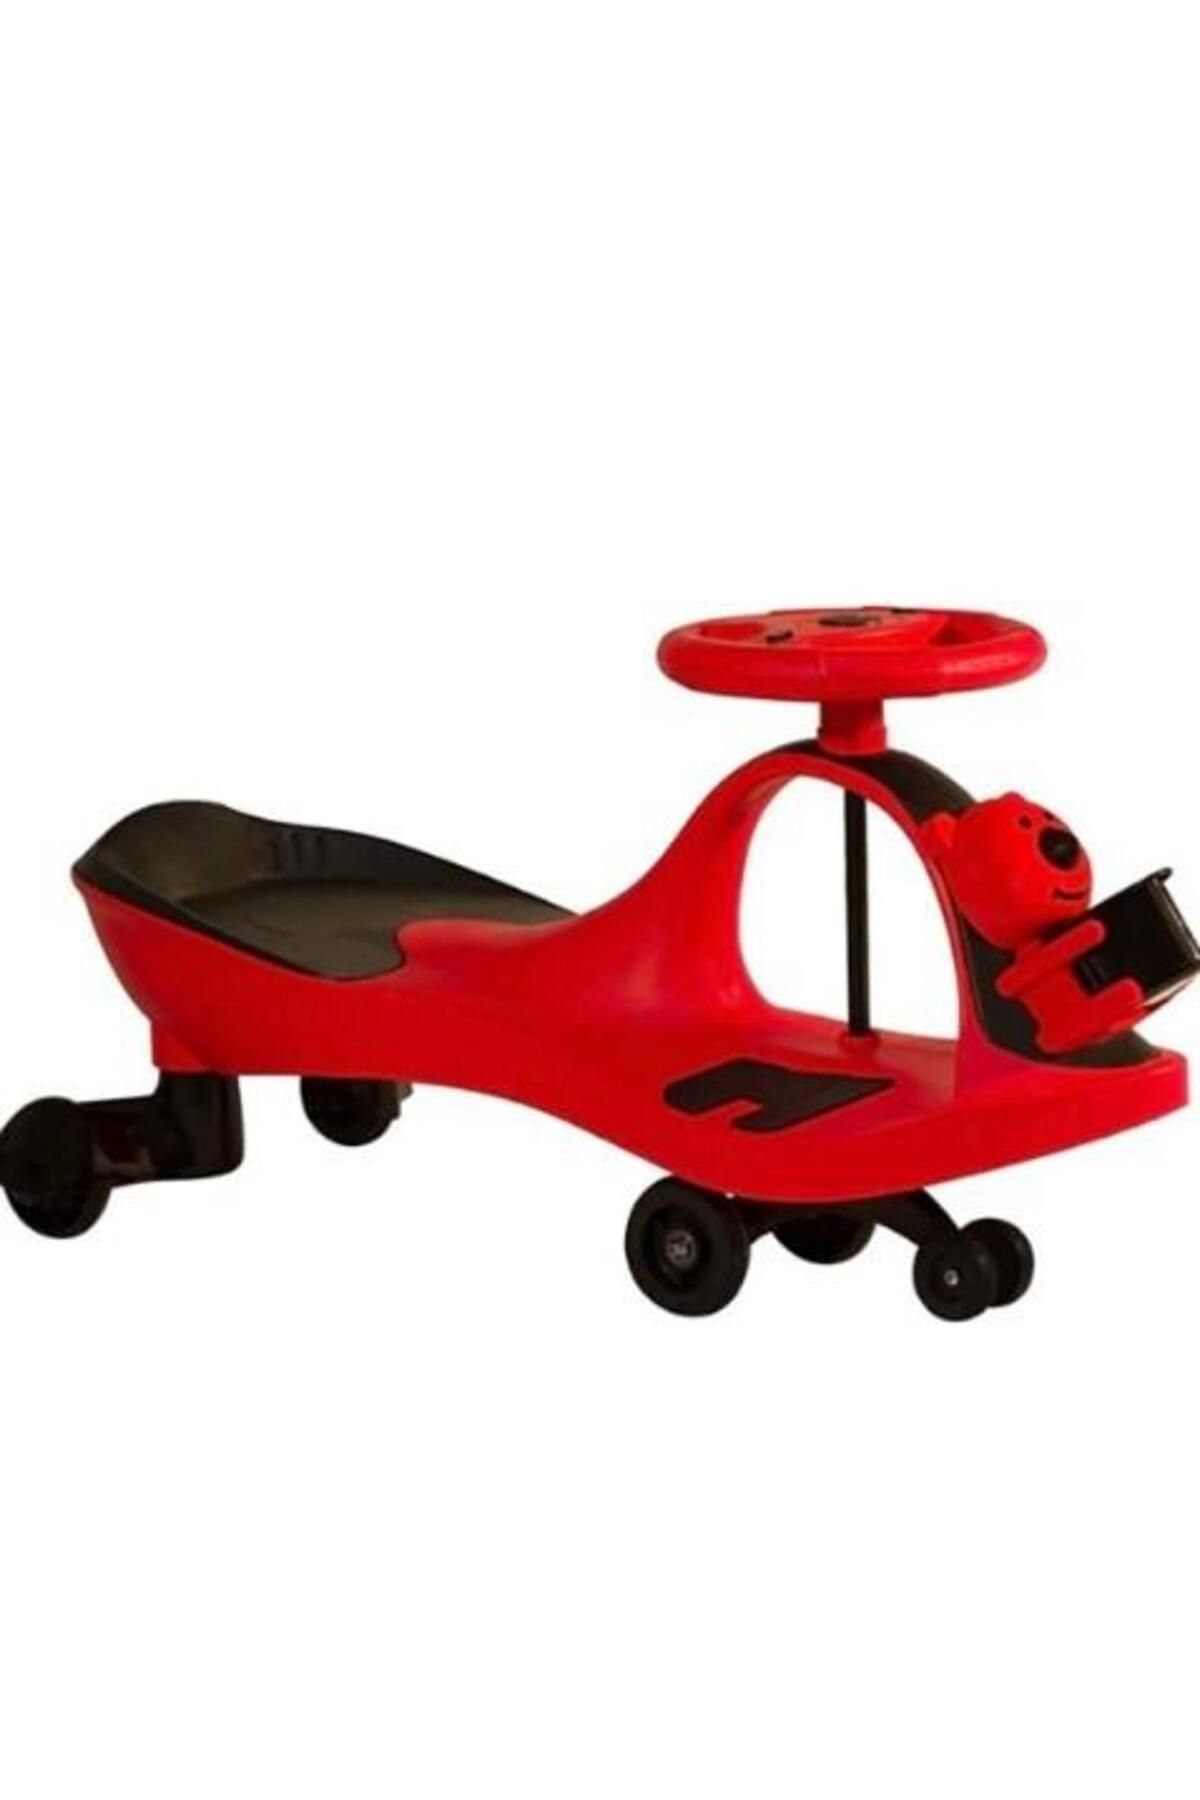 Genel Markalar Furkan Toys Karınca Kaykay Plazma Car Swing Car Sihirli Araba